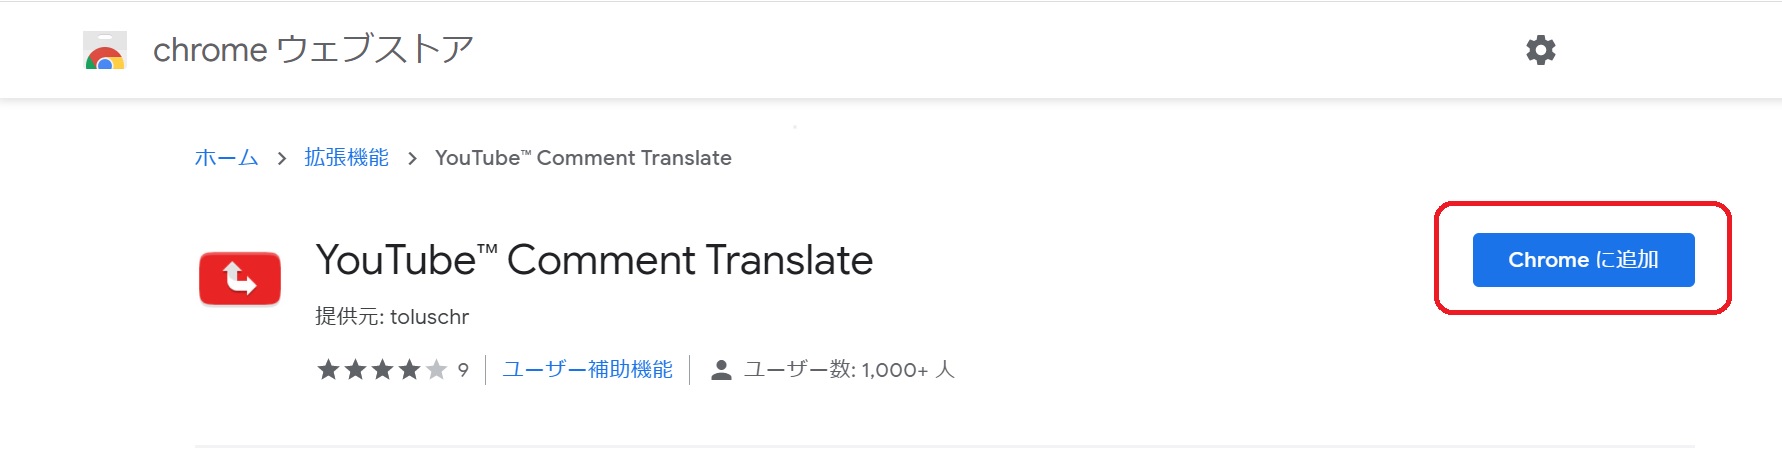 YouTube Comment Translateインストール